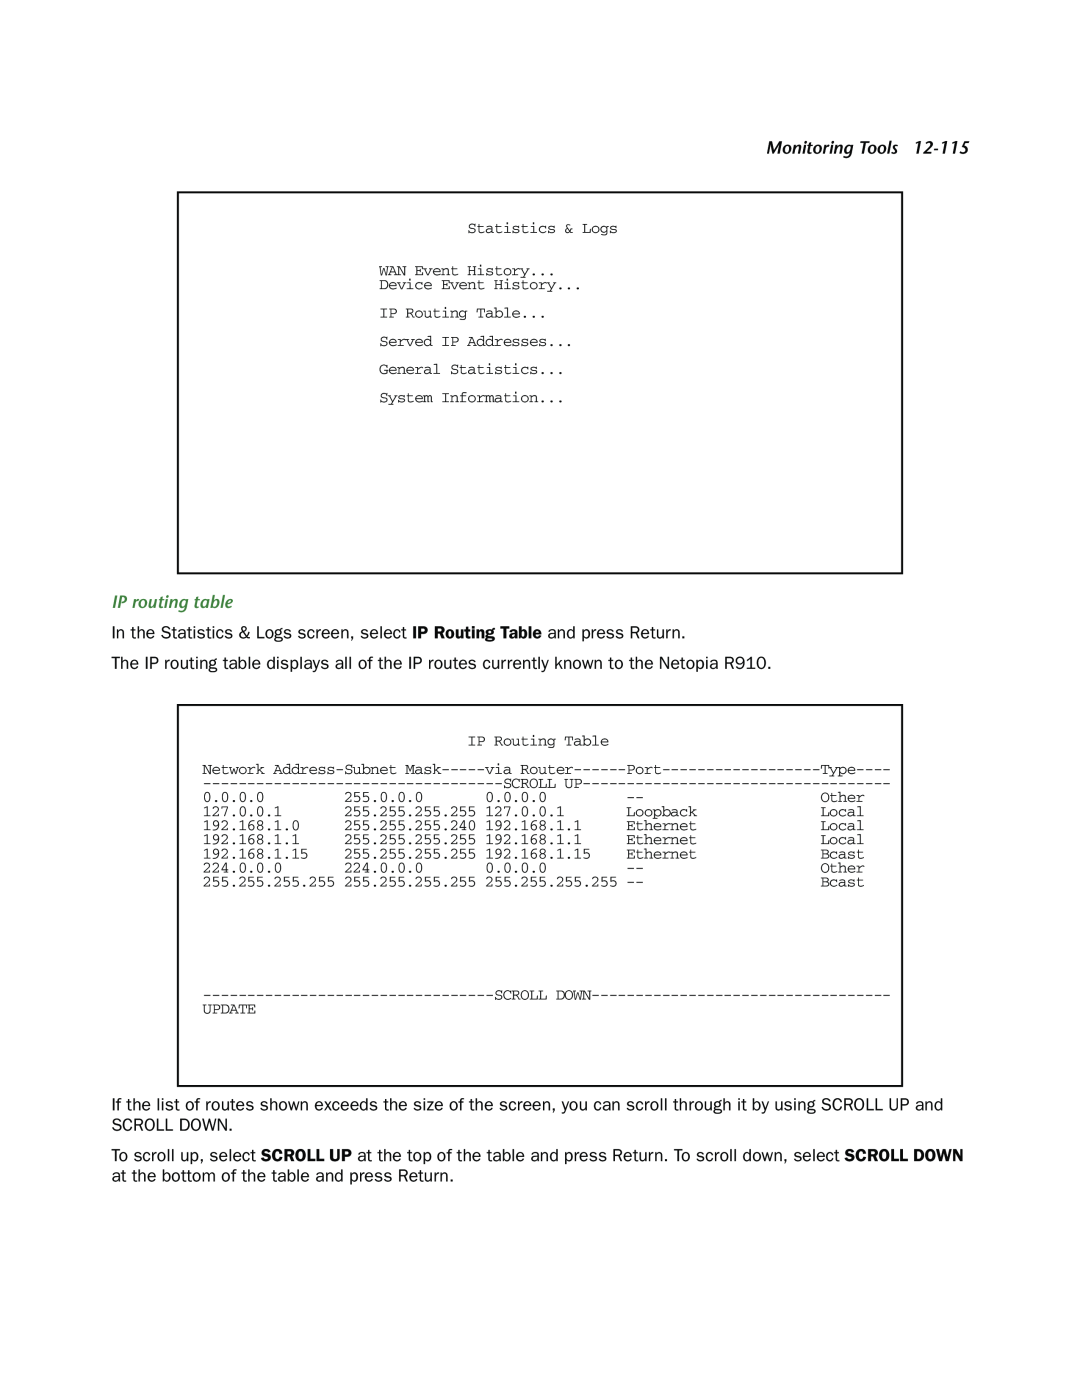 Netopia R910 manual IP routing table, Monitoring Tools 